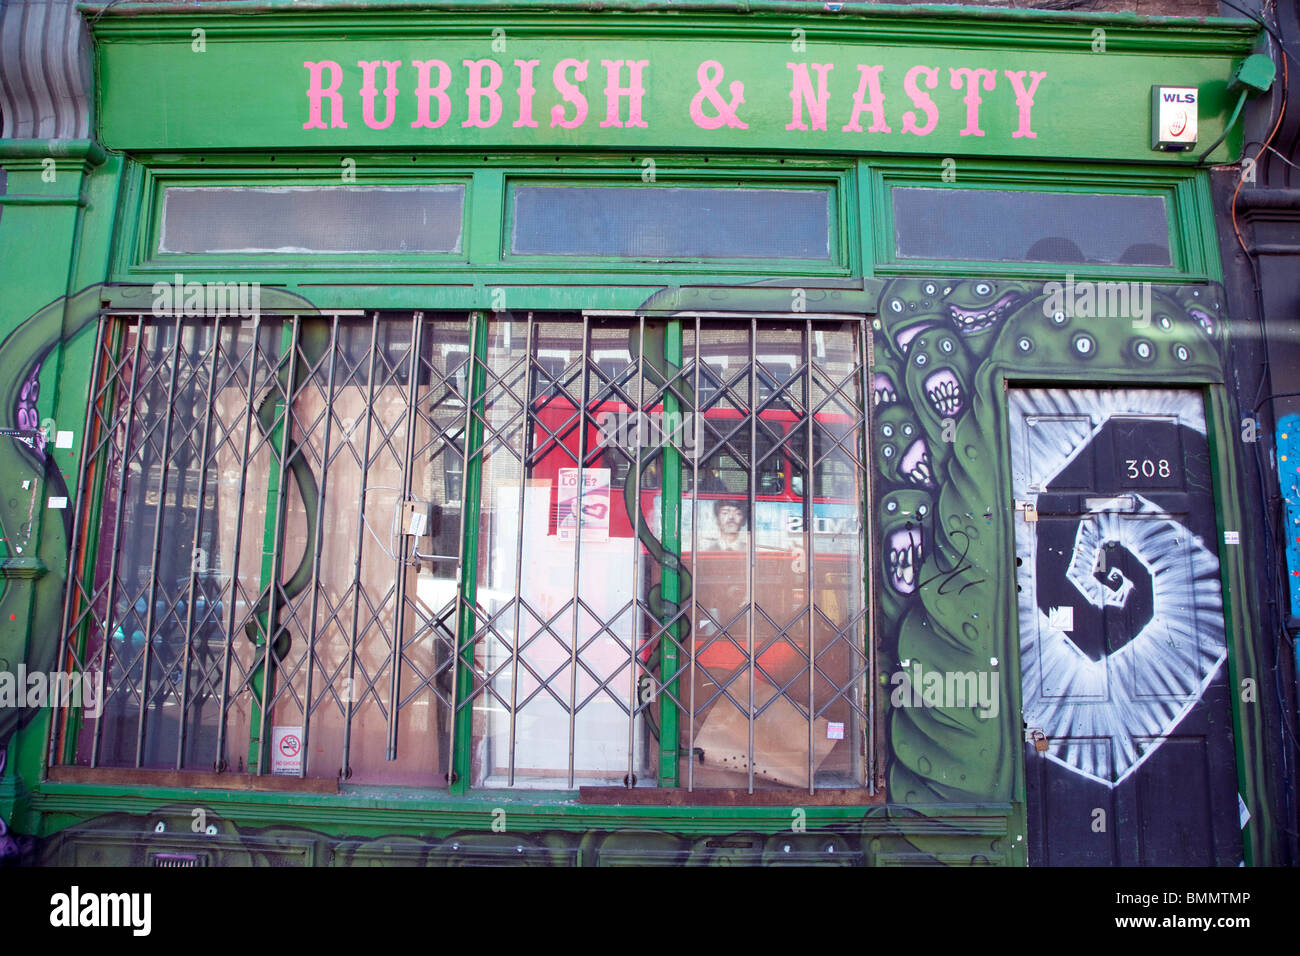 Rubbish & Nasty bar, New Cross, London Stock Photo